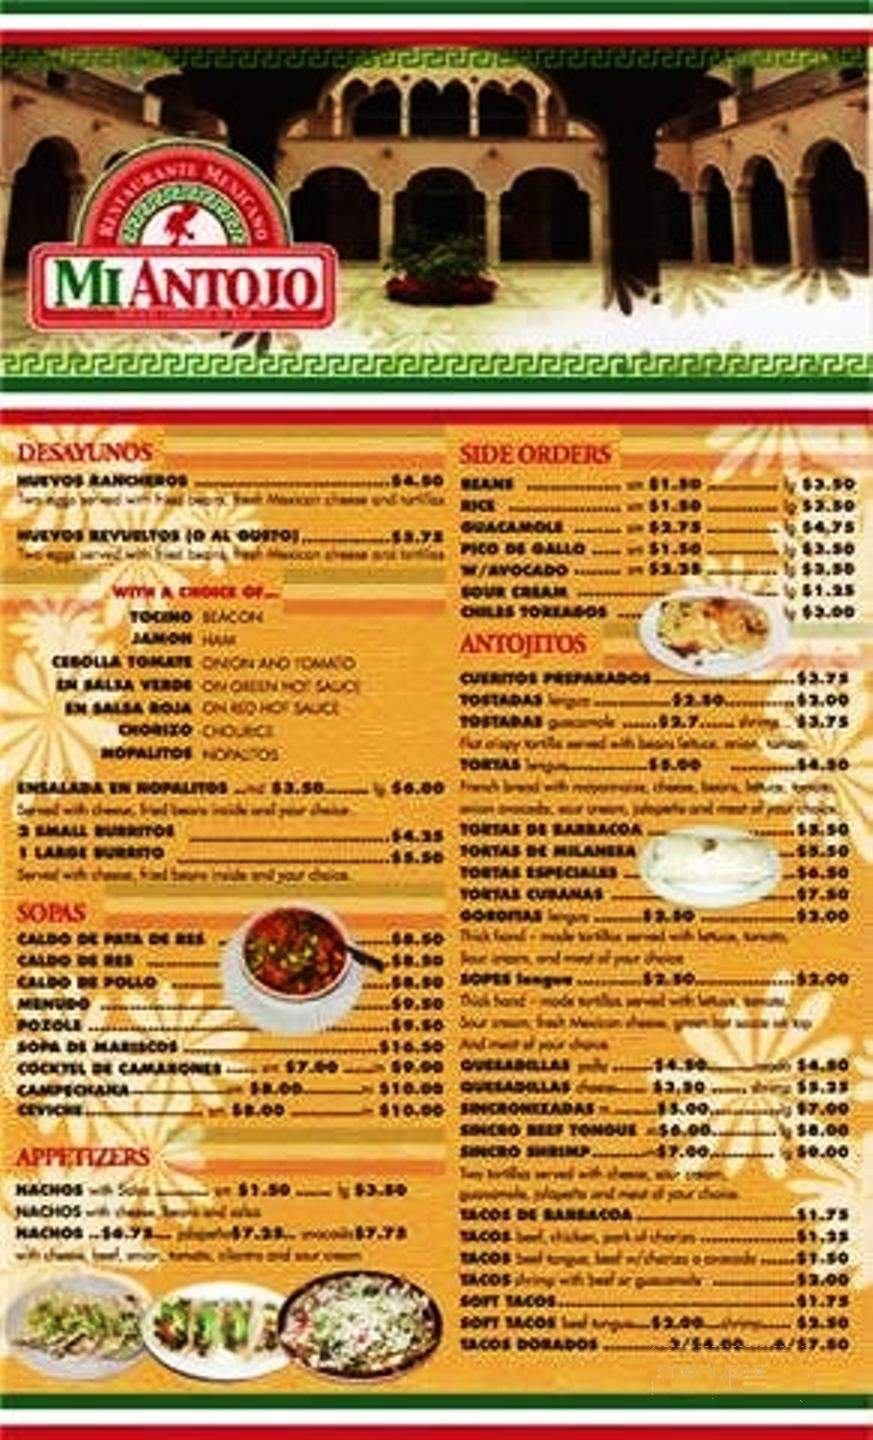 /29032765/Mi-Antojo-Mexican-Restaurant-New-Bedford-MA - New Bedford, MA